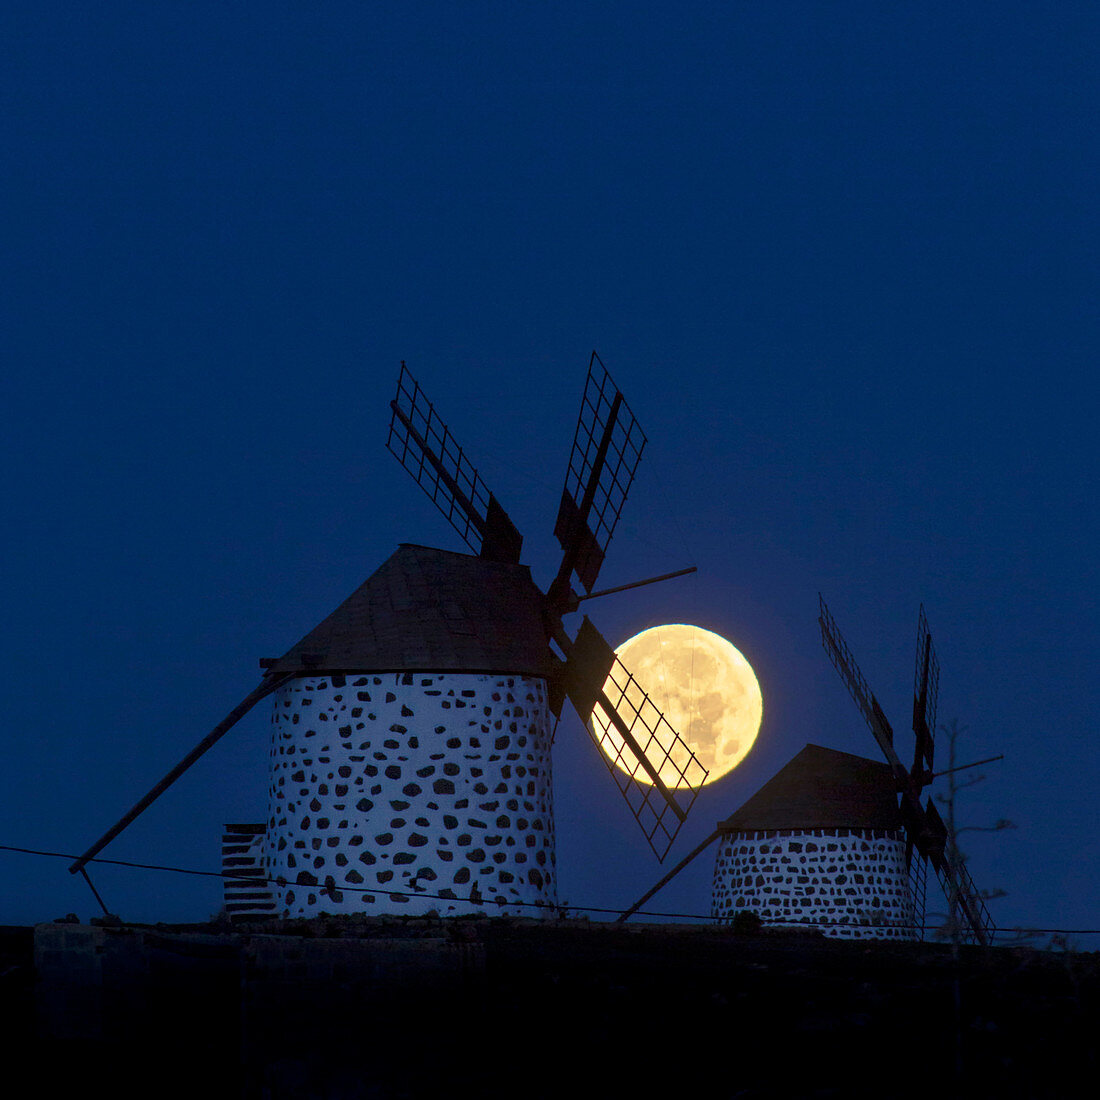 Full moon and windmills